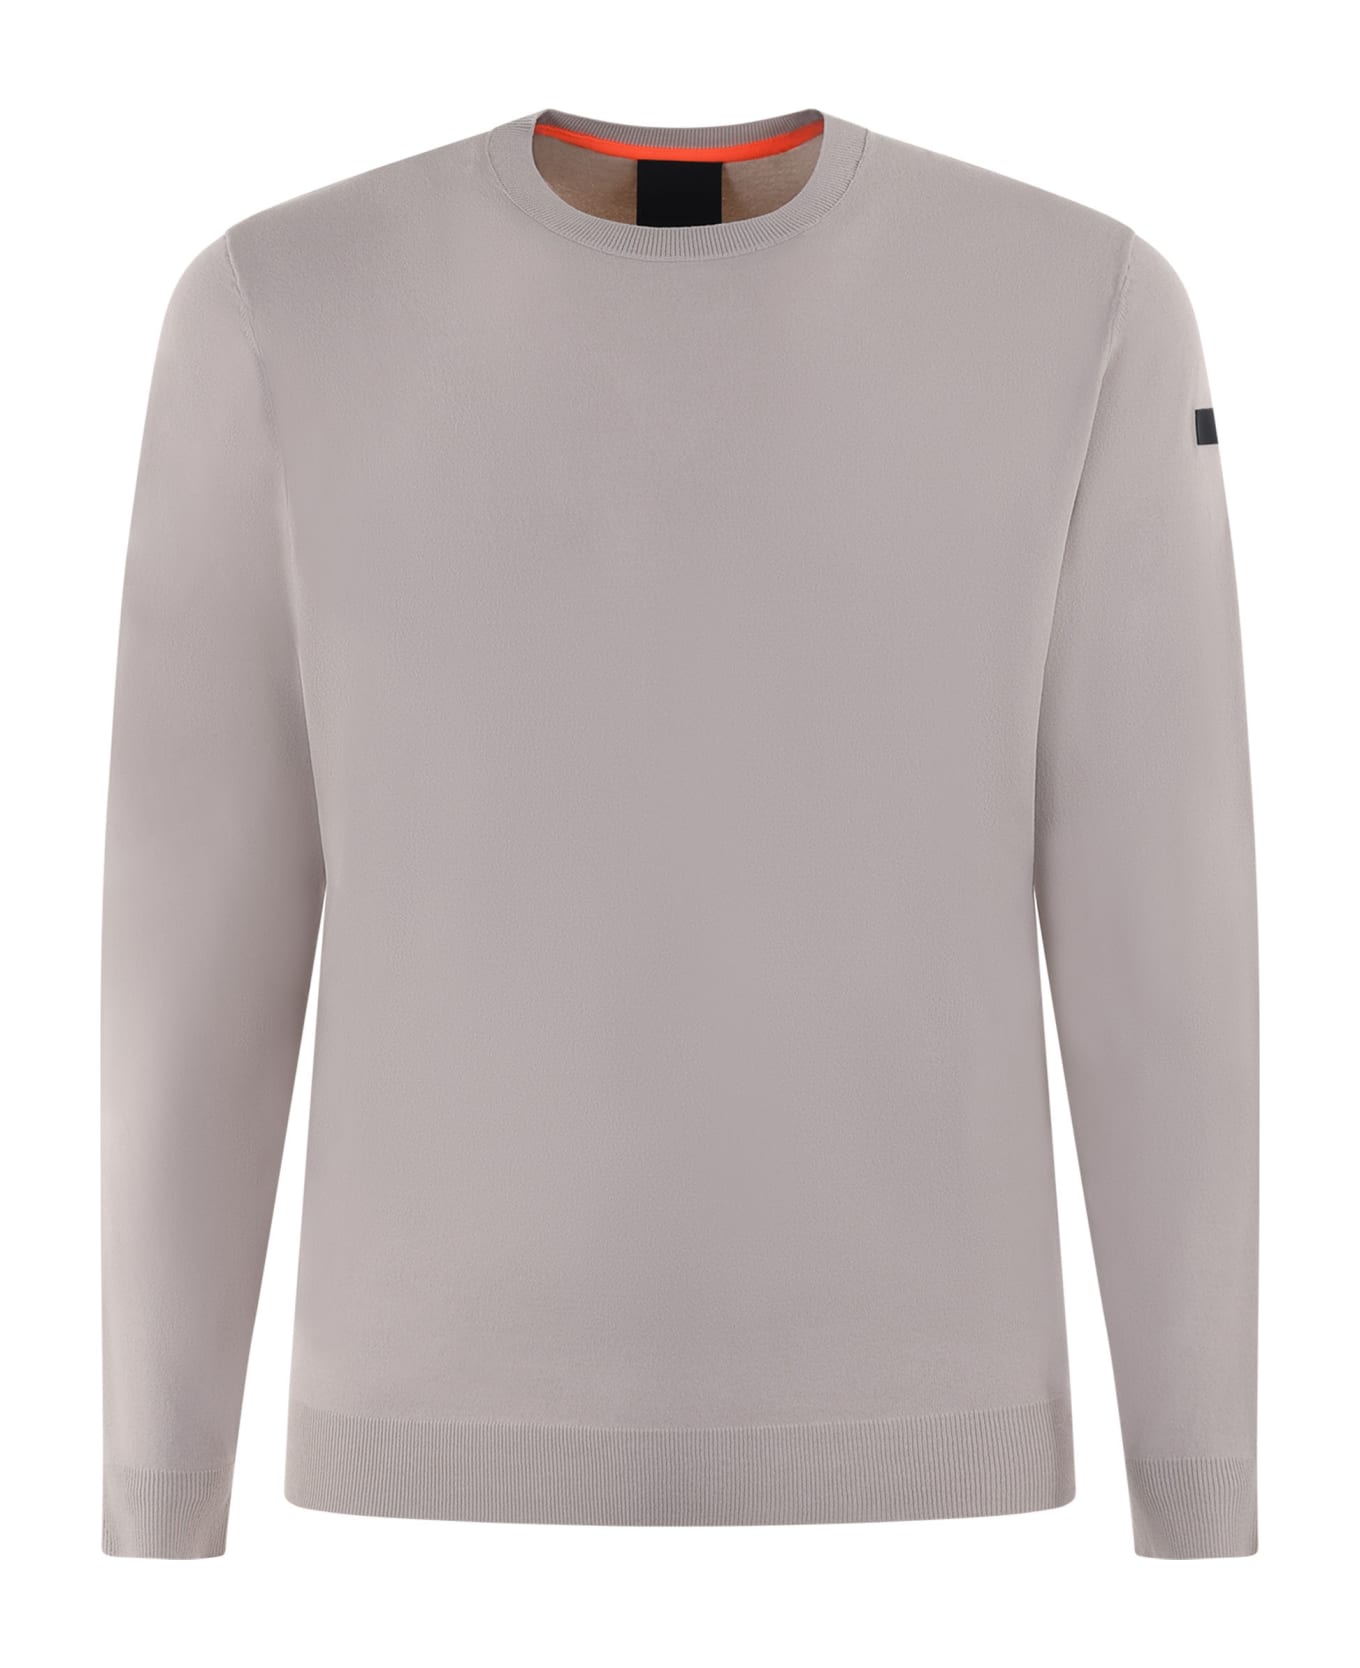 RRD - Roberto Ricci Design Rrd Sweater - Sabbia ニットウェア